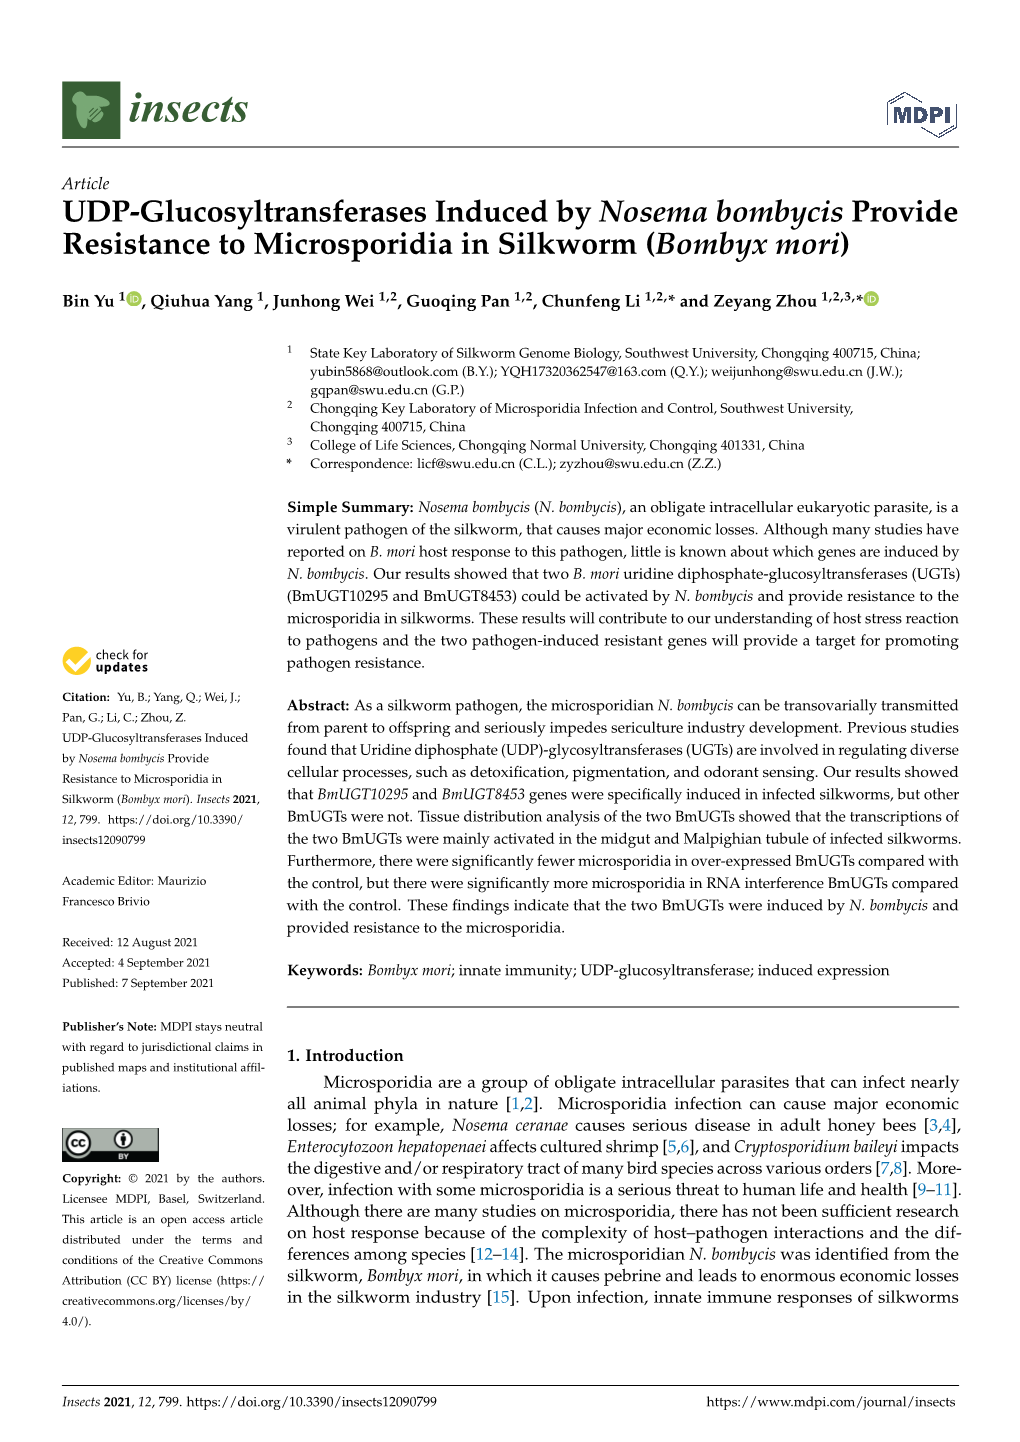 UDP-Glucosyltransferases Induced by Nosema Bombycis Provide Resistance to Microsporidia in Silkworm (Bombyx Mori)